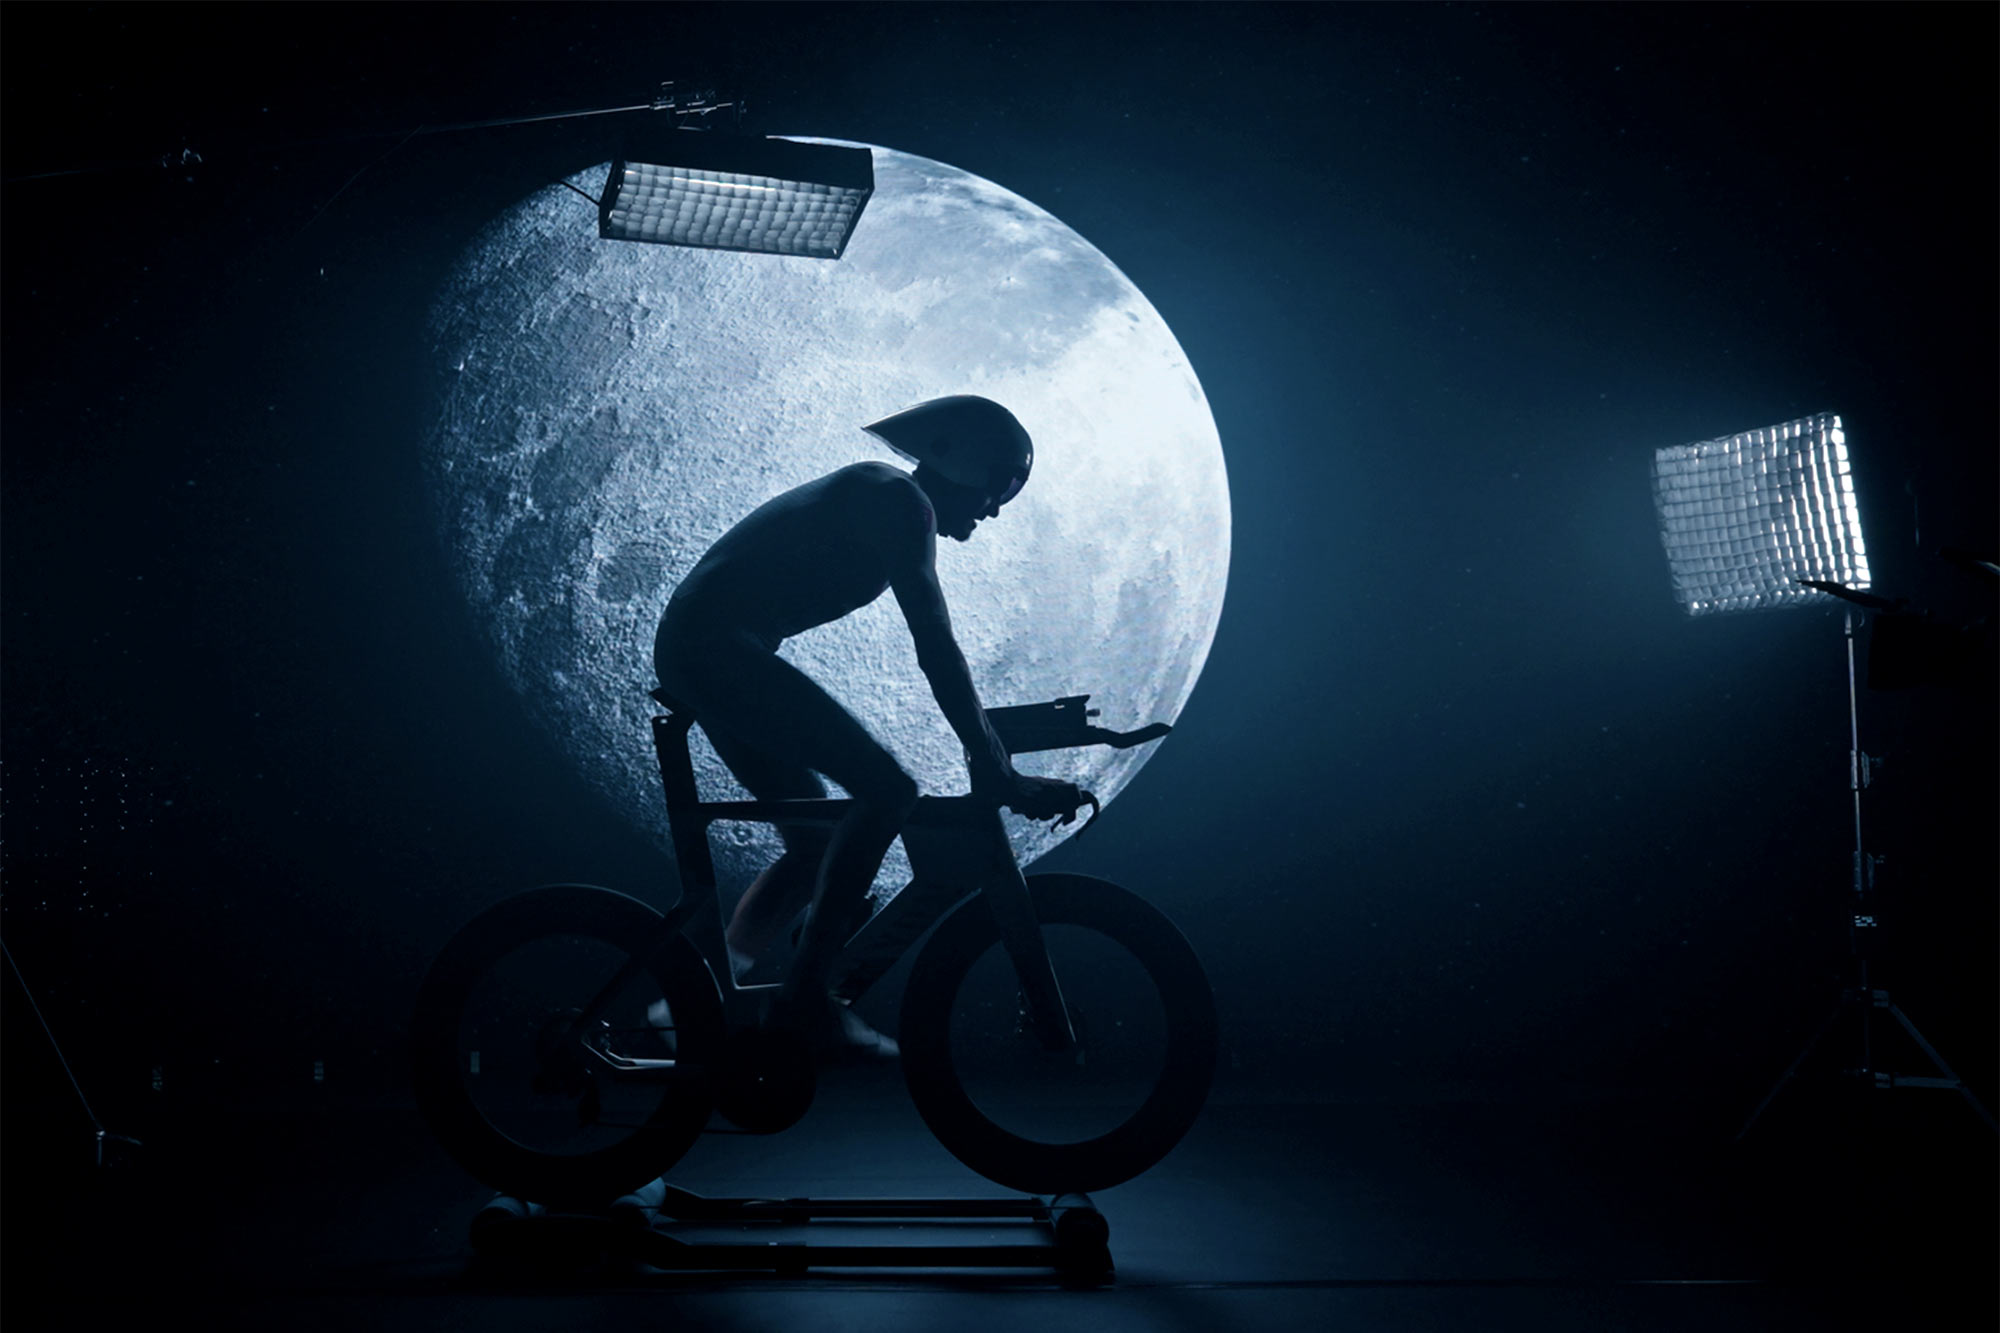 Canyon Speedmax CFR Moonshot LTD limited edition Jan Frodeno-signature triathlon bike, lunar silhouette